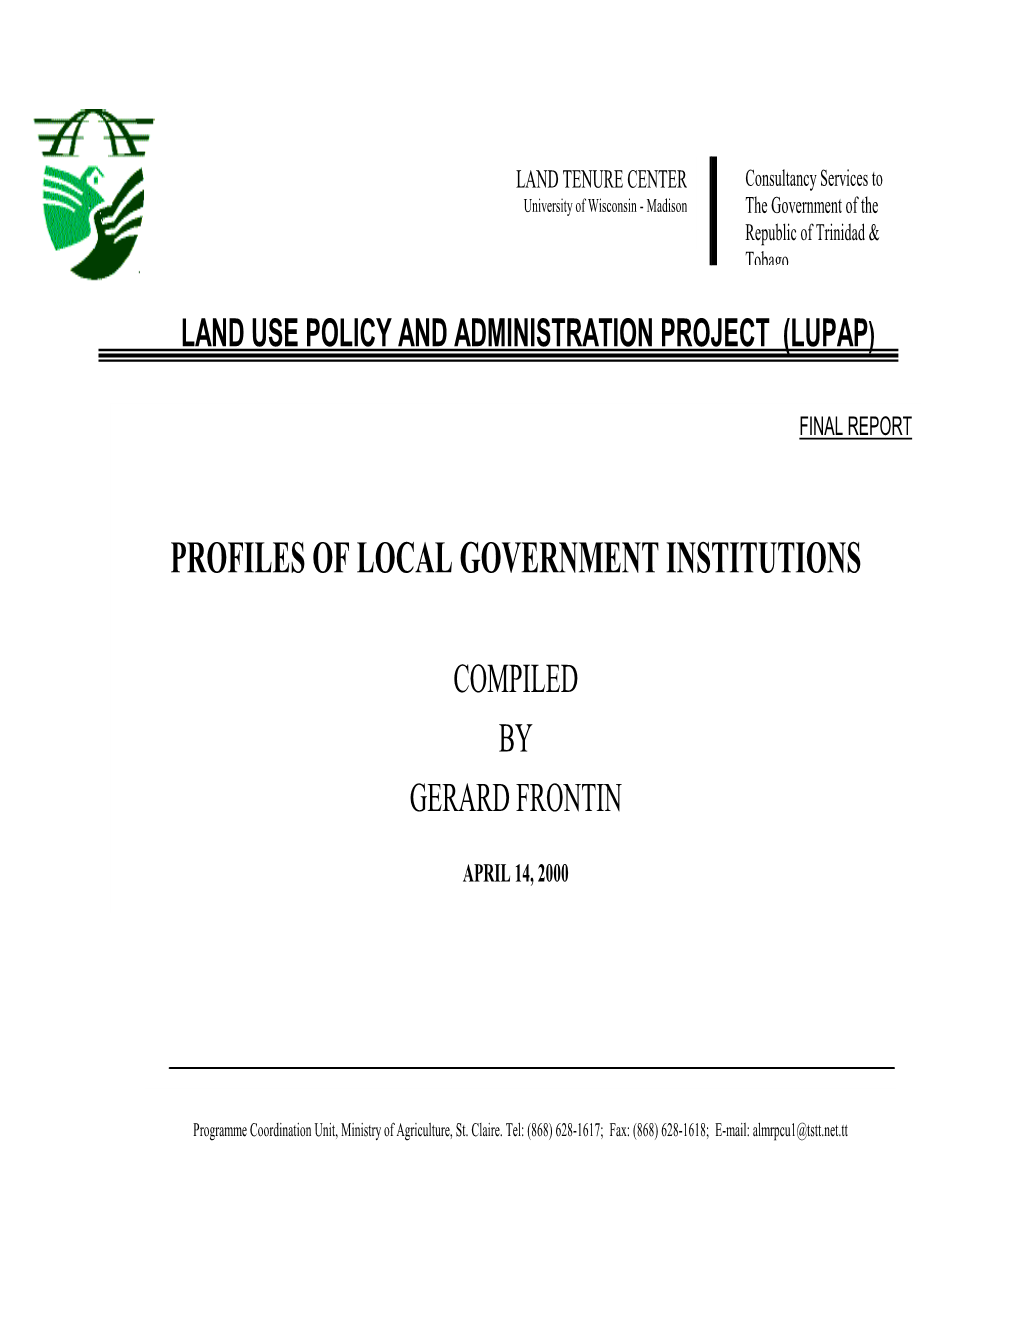 Profile of Municipal and Regional Corporations